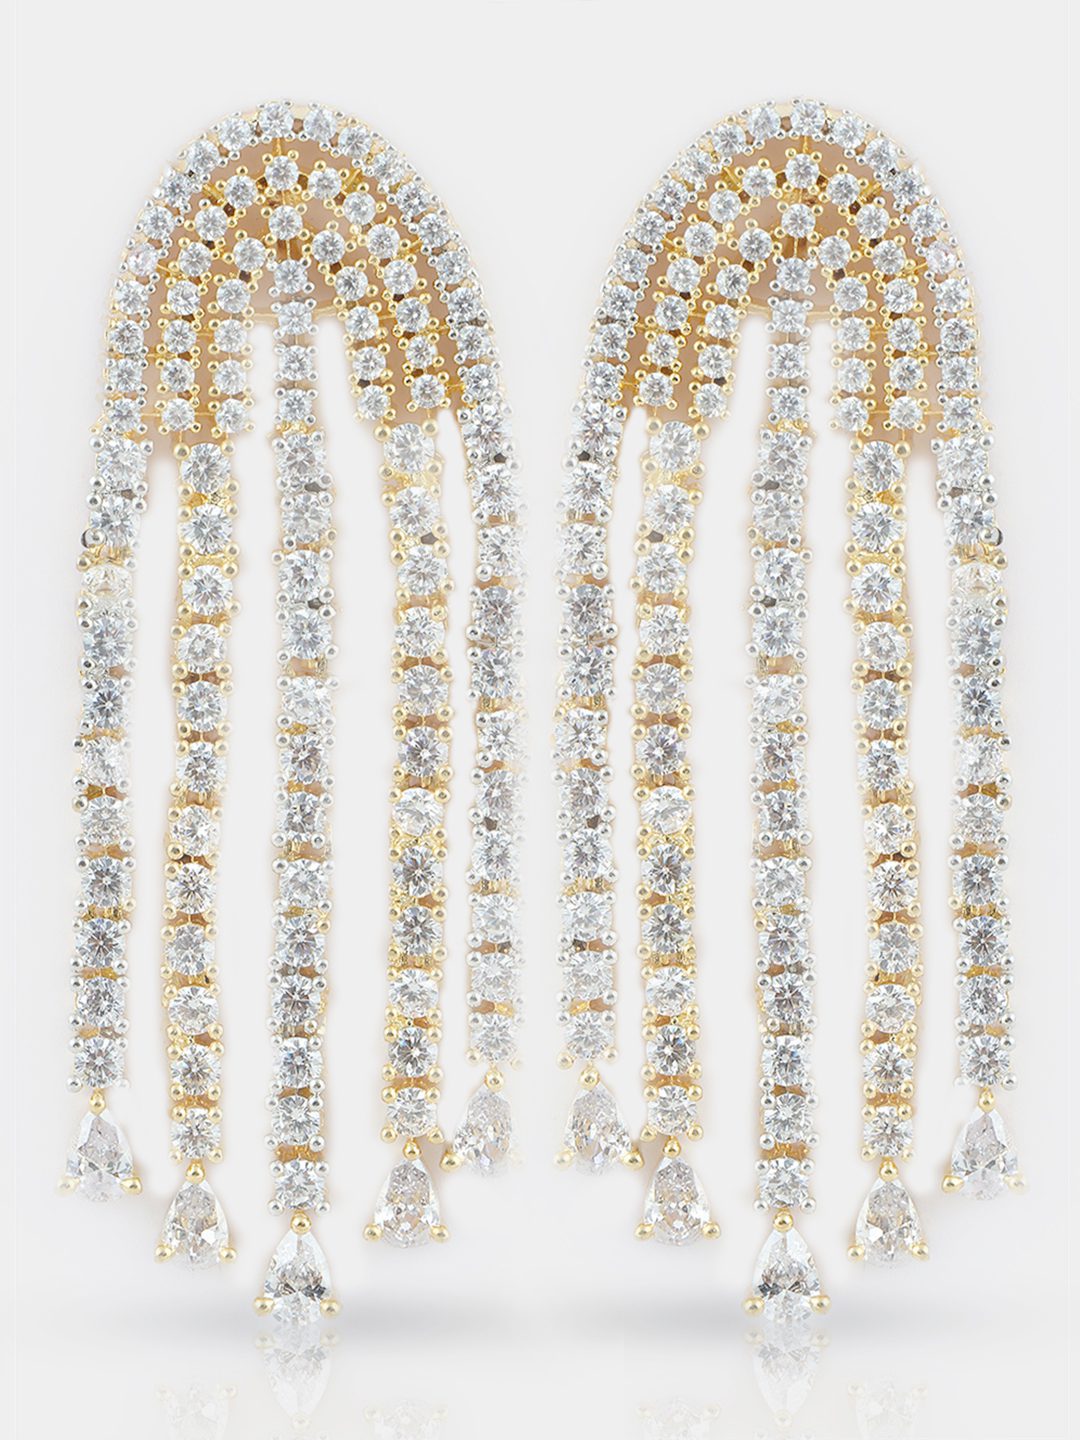 Aristocratic Rhodium Plated American Diamond Necklace Set